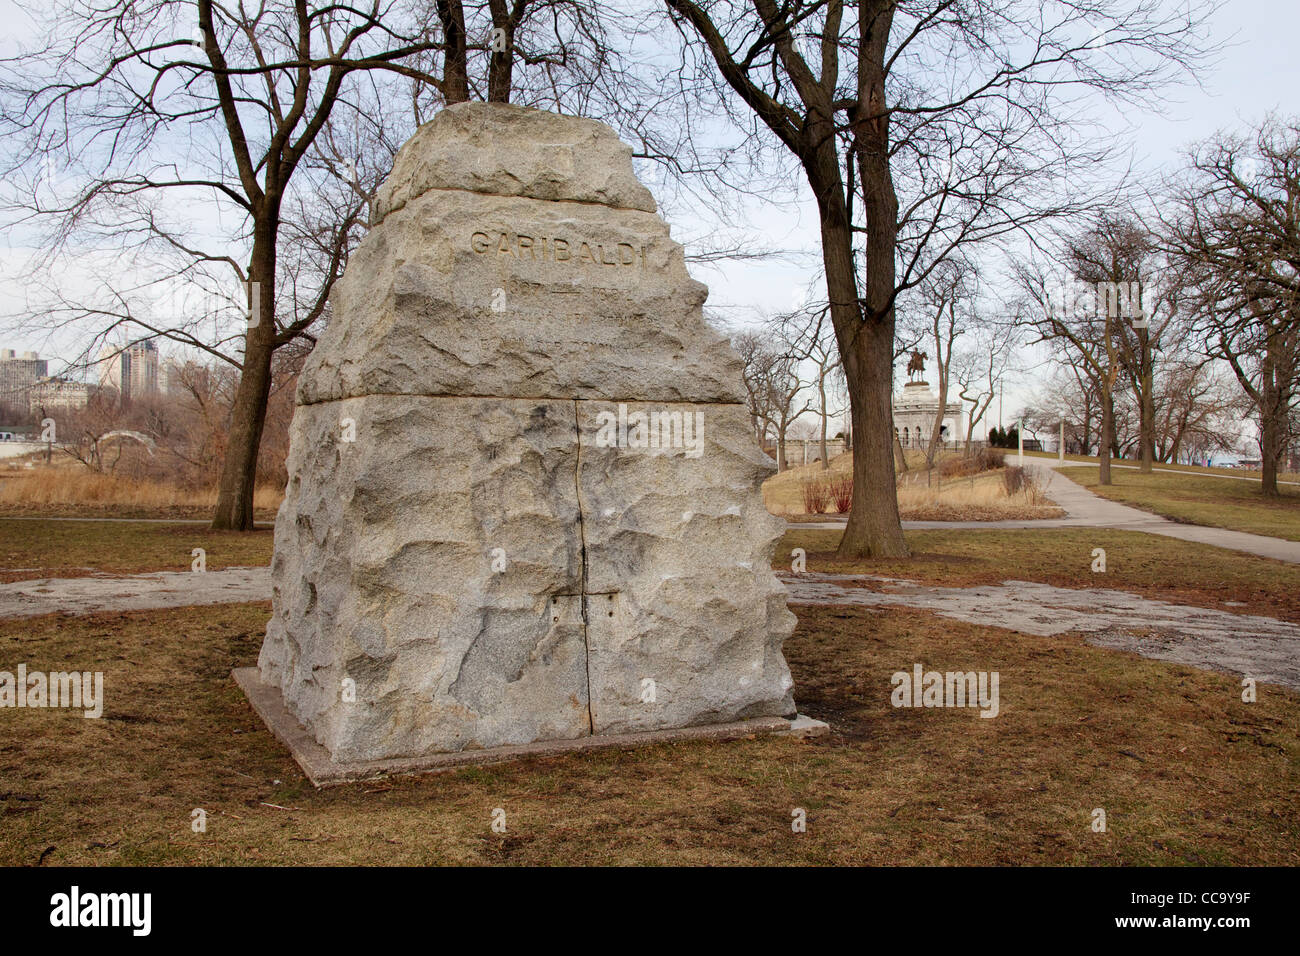 Empty pedestal where statue of Giuseppe Garibaldi once stood in Lincoln Park, Chicago, Illinois. Stock Photo